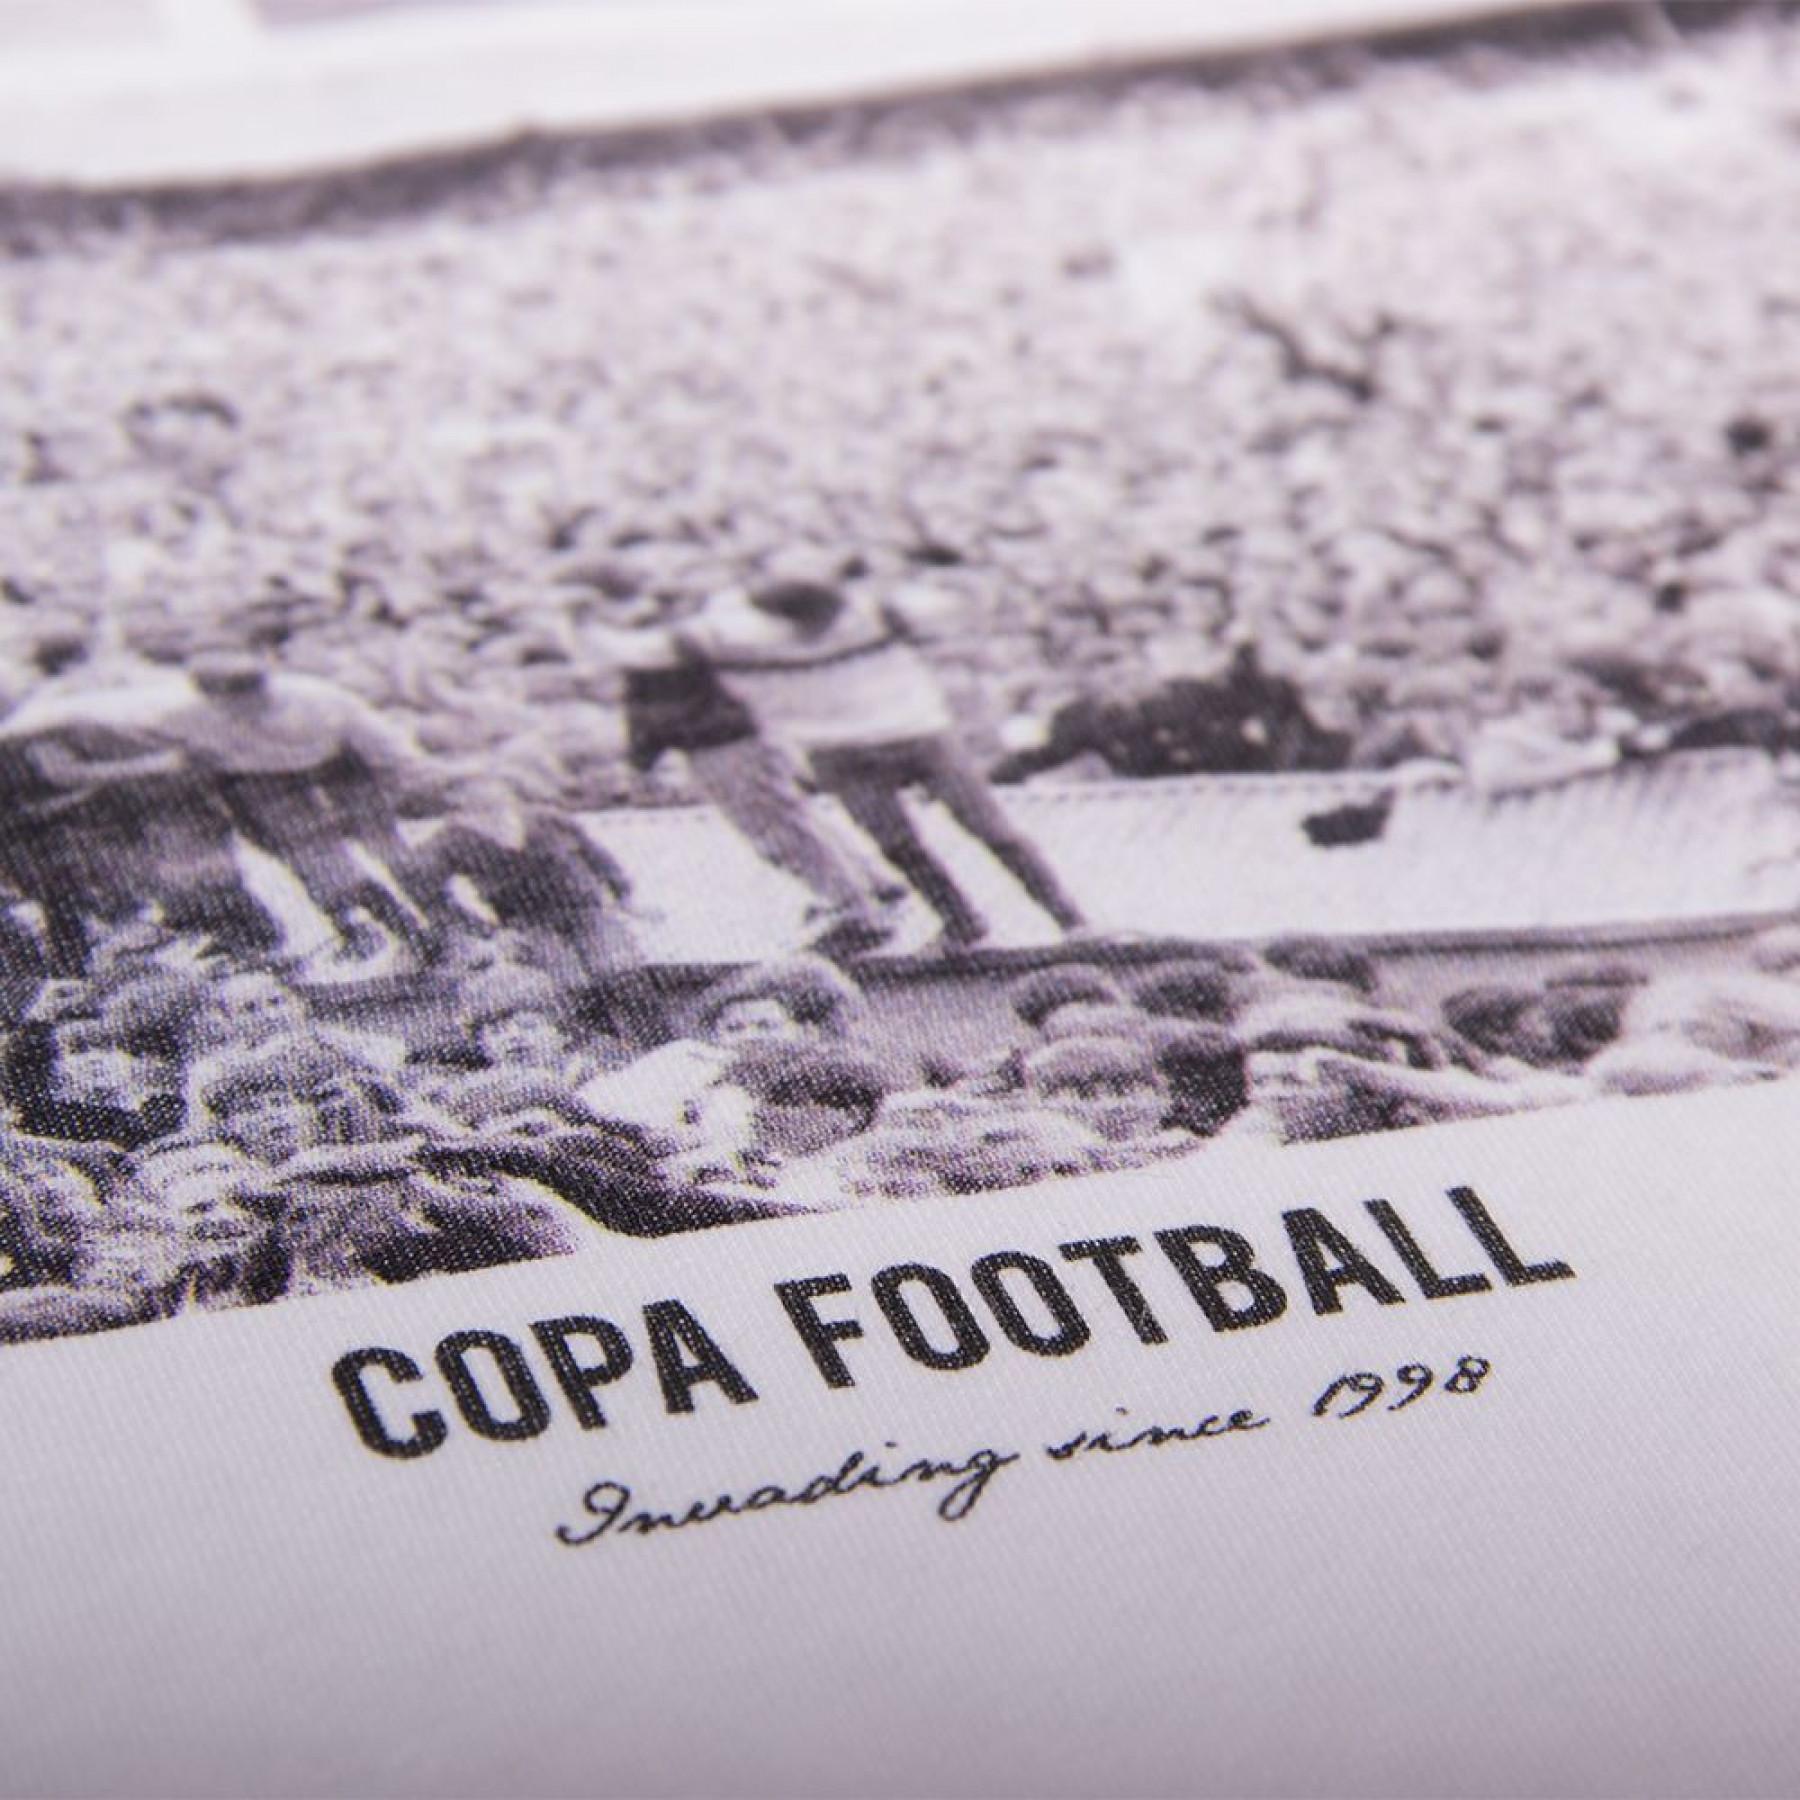 T-shirt Copa Football Pitch Invasion